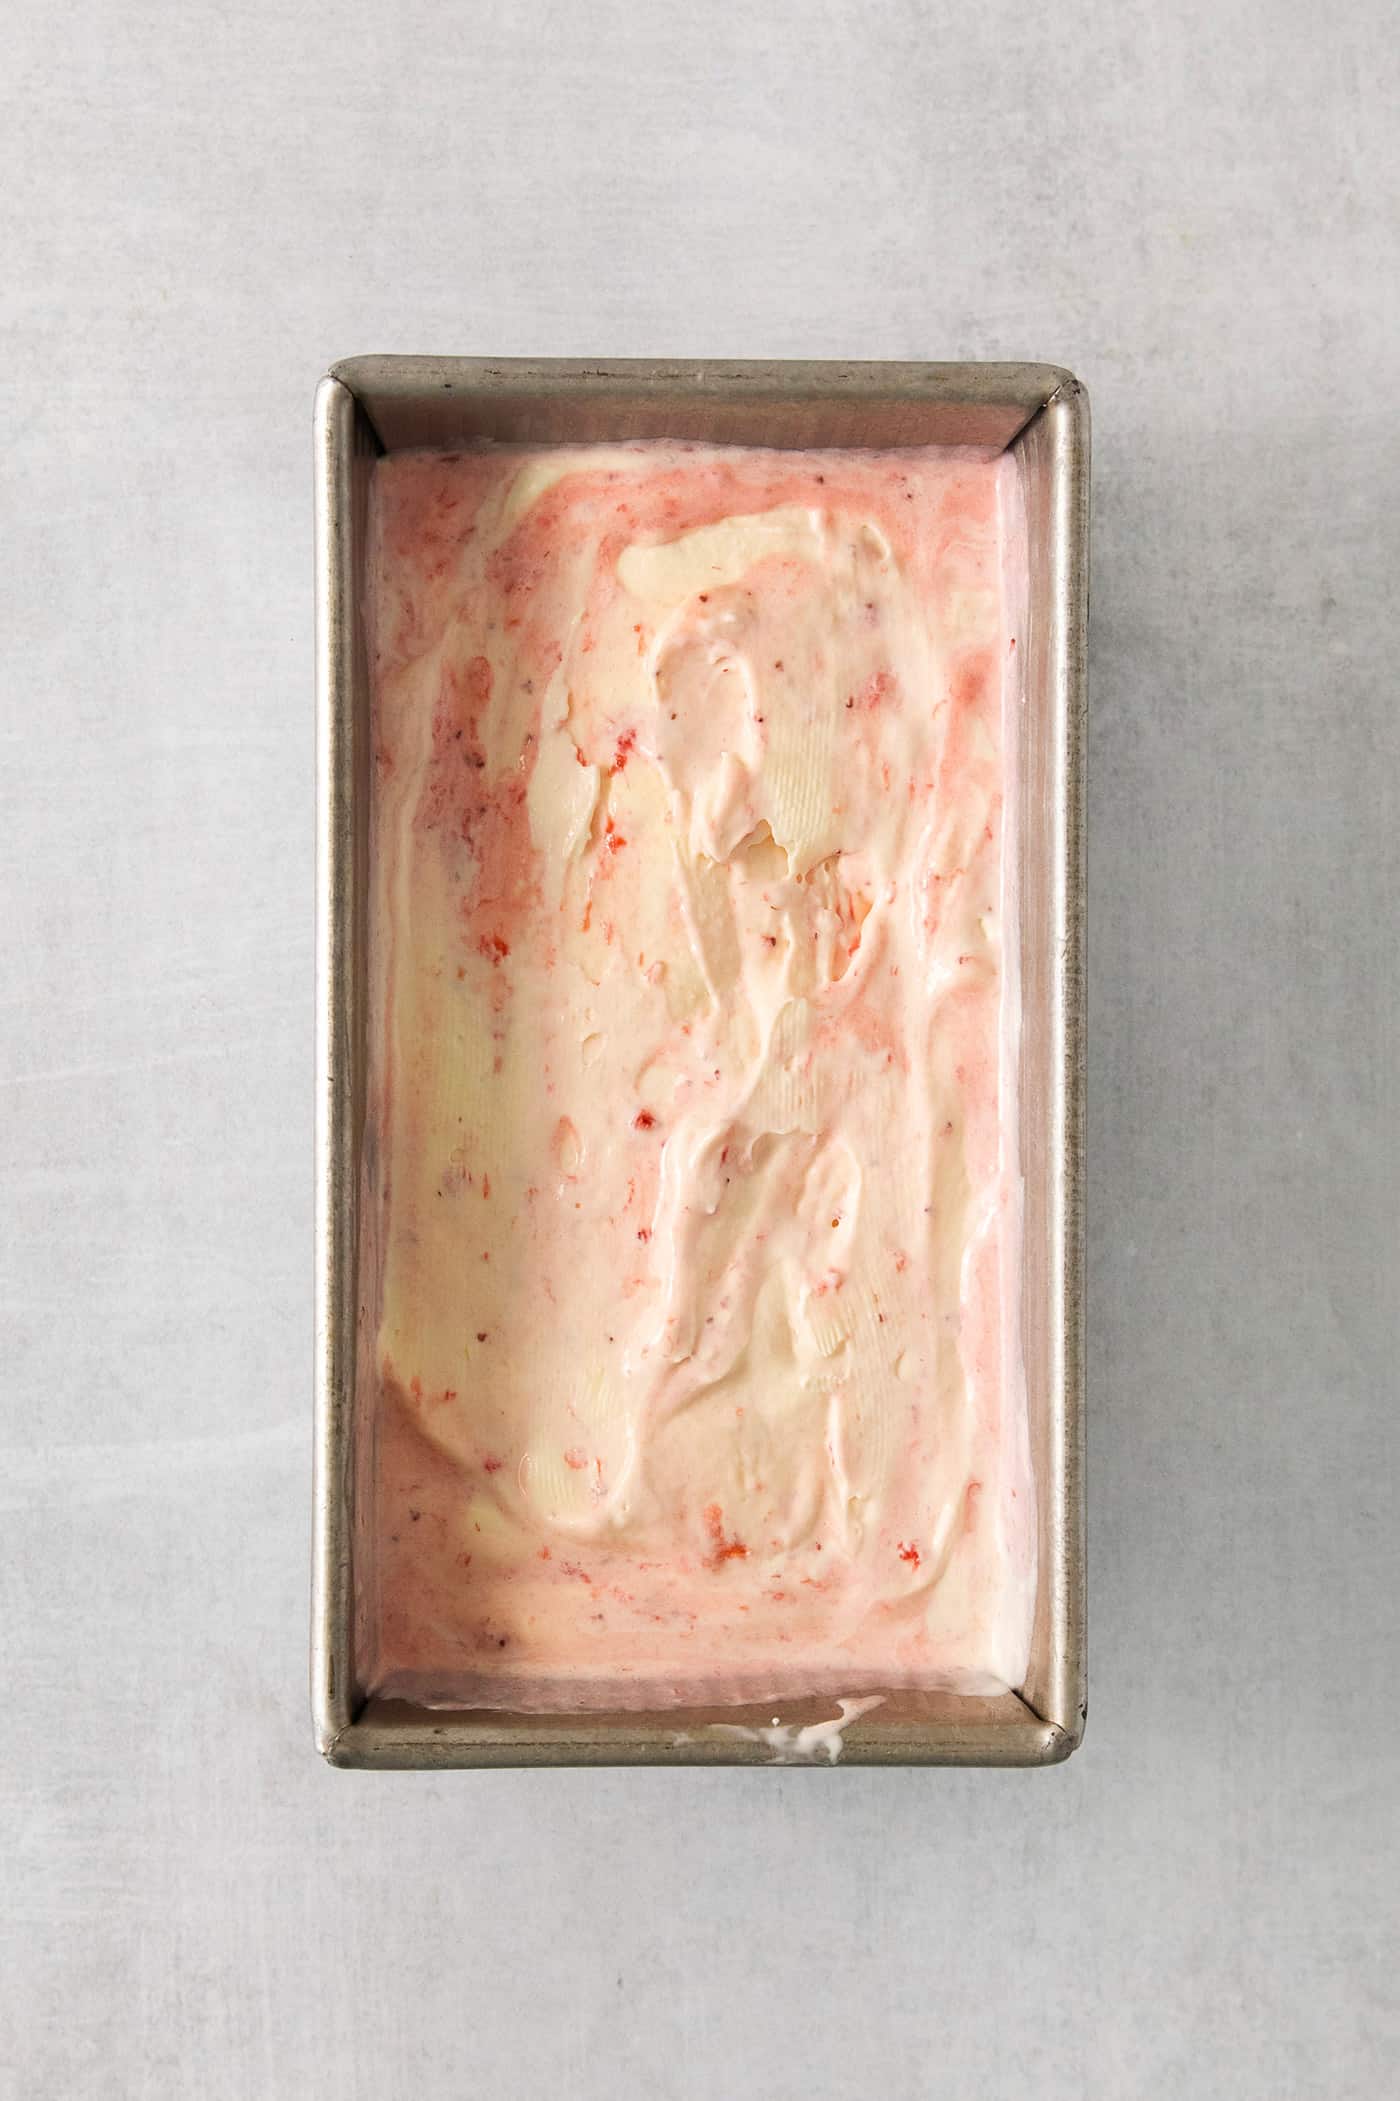 Crème fraîche strawberry swirl ice cream in a loaf pan.